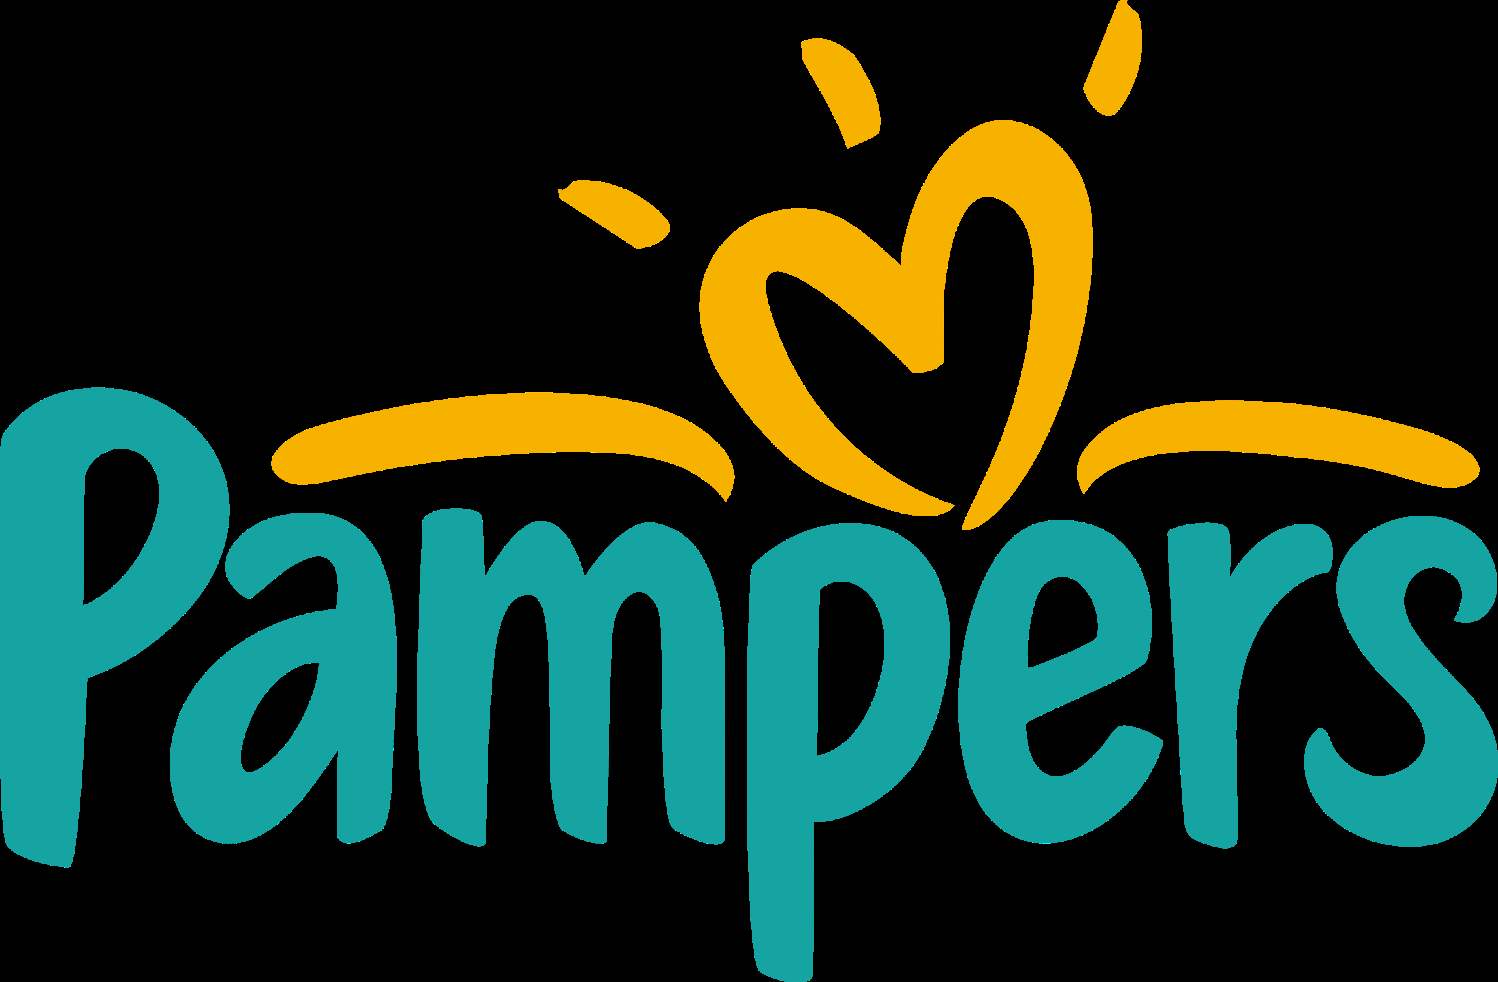 Pampers Logo - Pampers Logo. Pampers Logo Design Vector Free Download